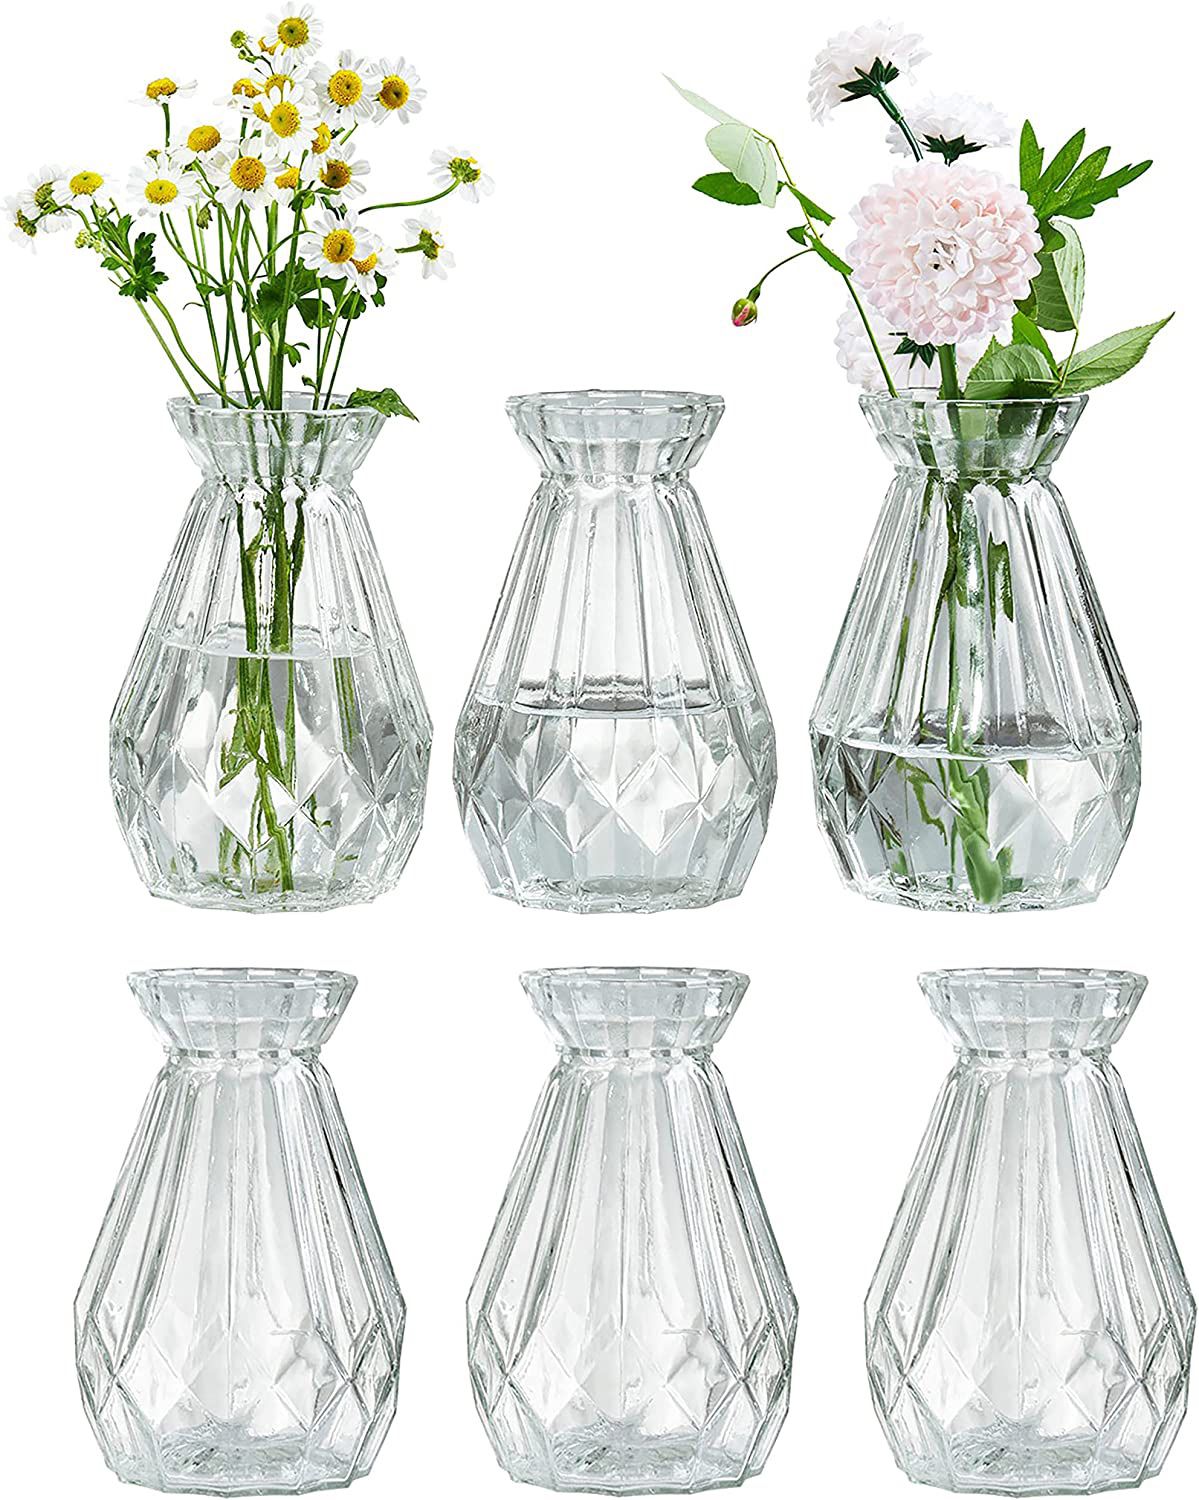 NEW! MyGift Decorative Clear Glass Vase, Diamond-Faceted Flower Bud Vases, Set of 6 / Florero